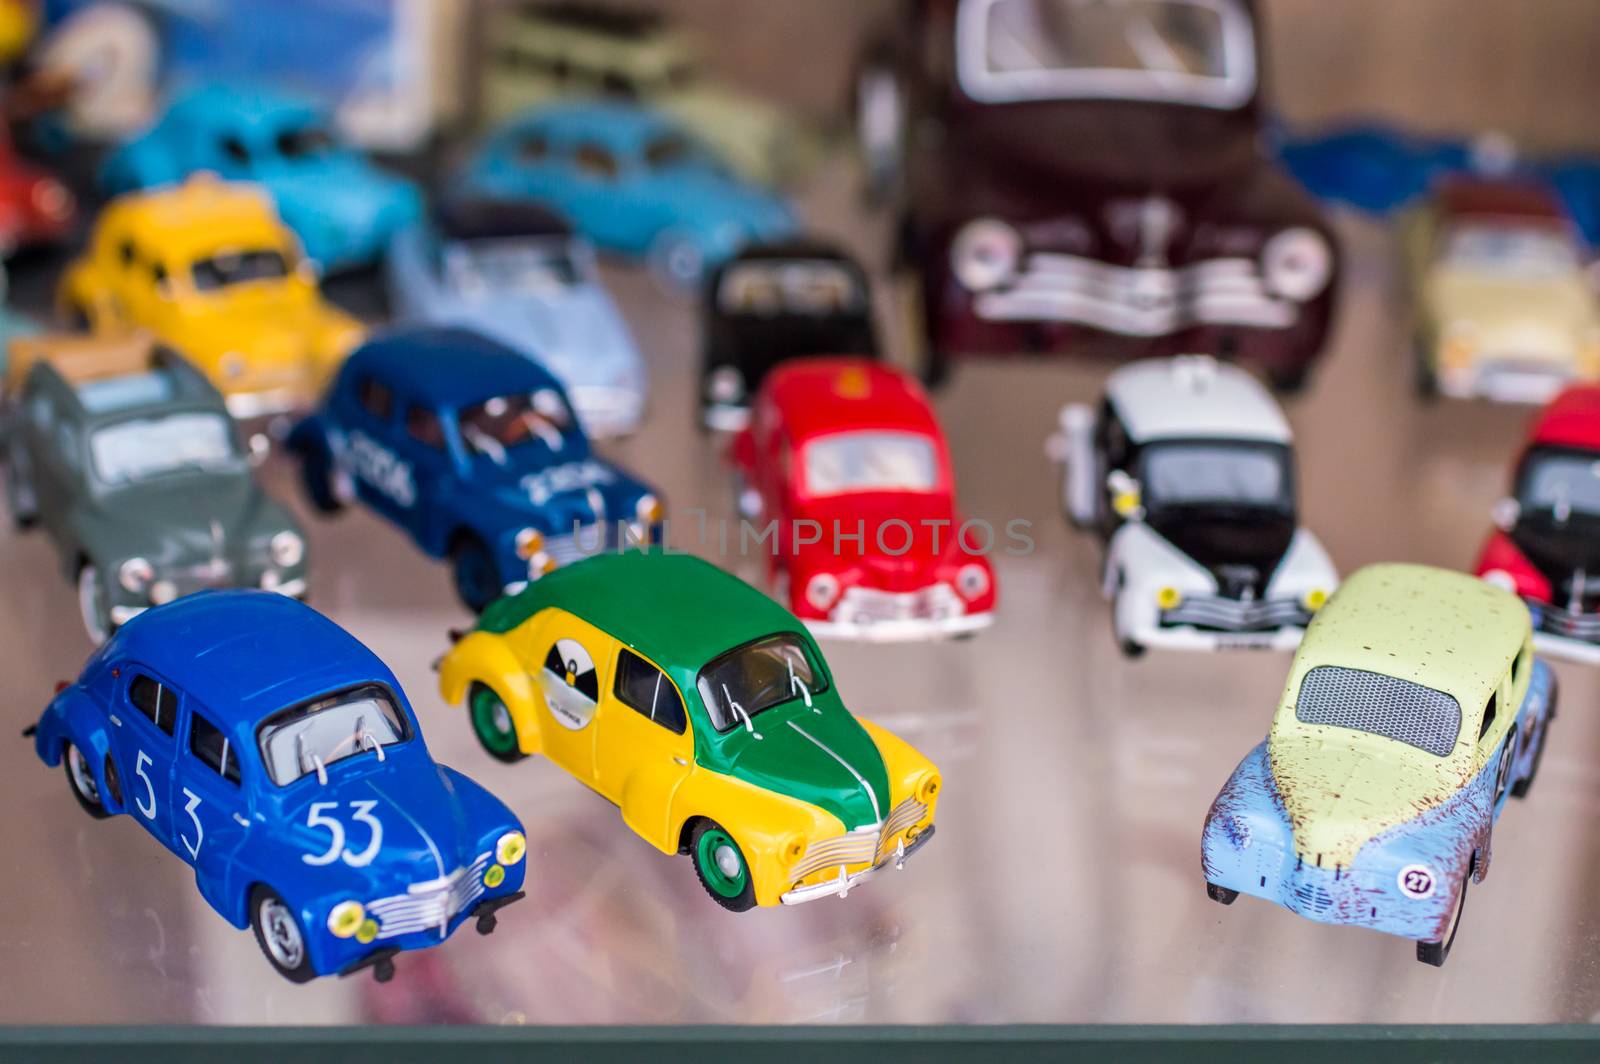 Retro colorful sport toy cars by okskukuruza